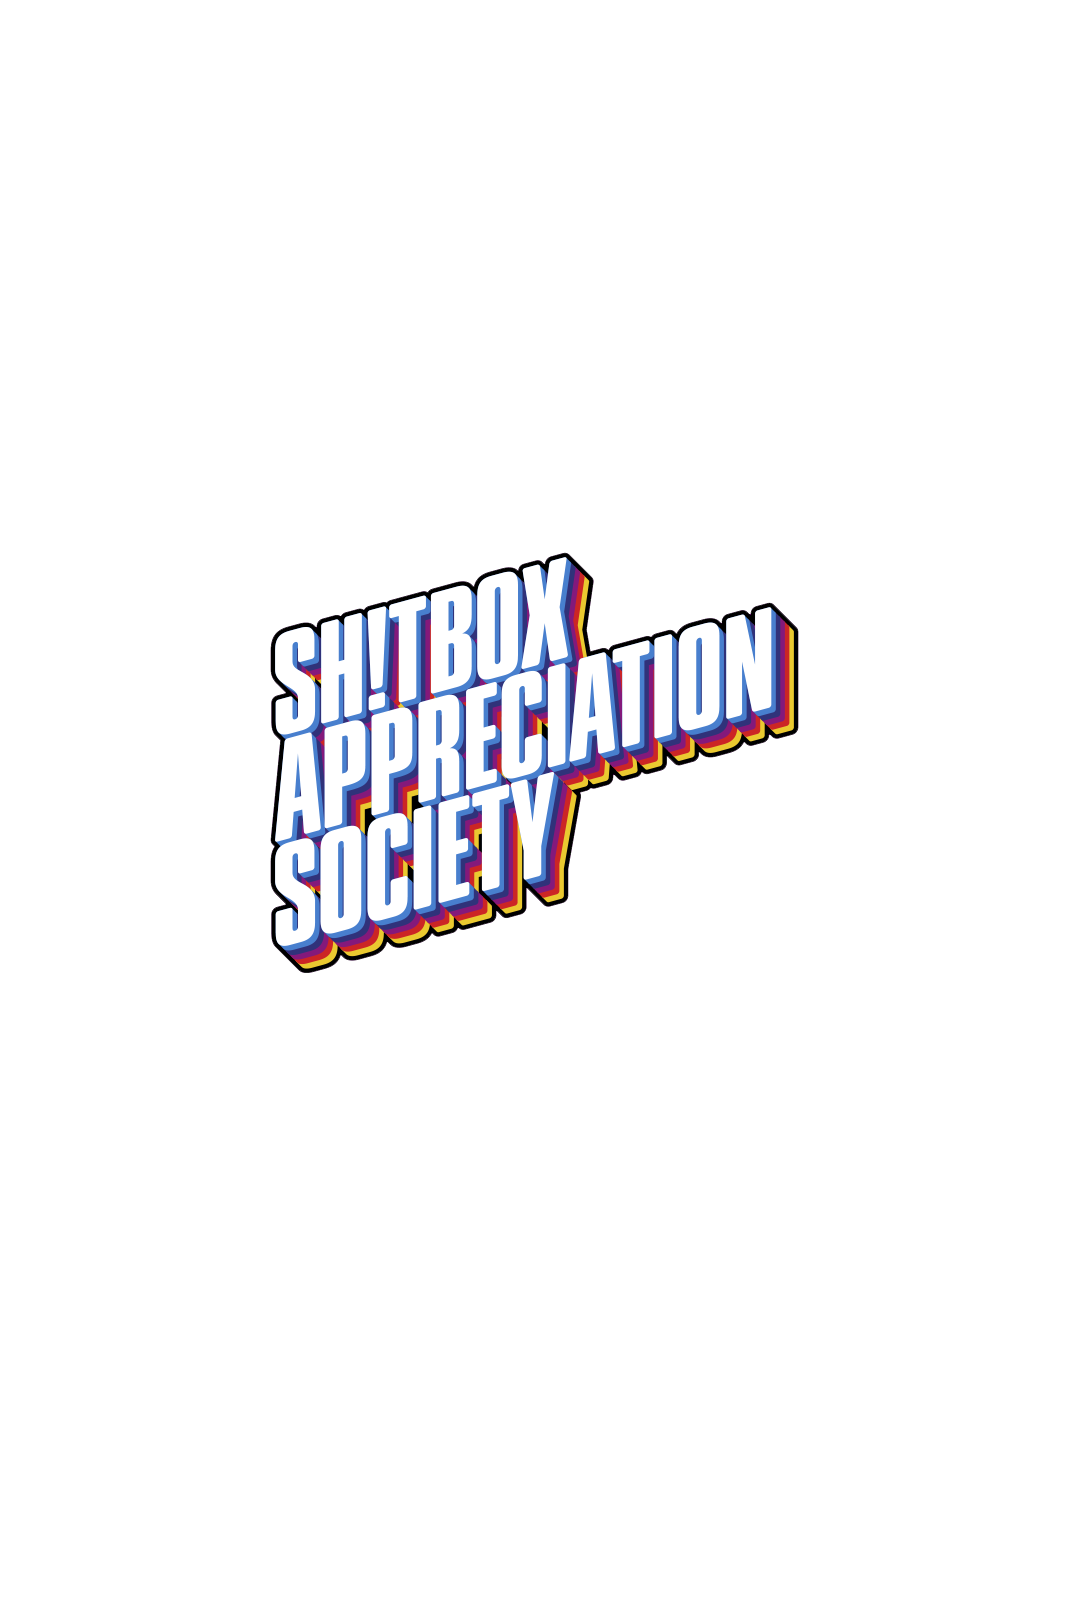 SHITBOX APPRECIATION SOCIETY - RAINBOW | STICKER